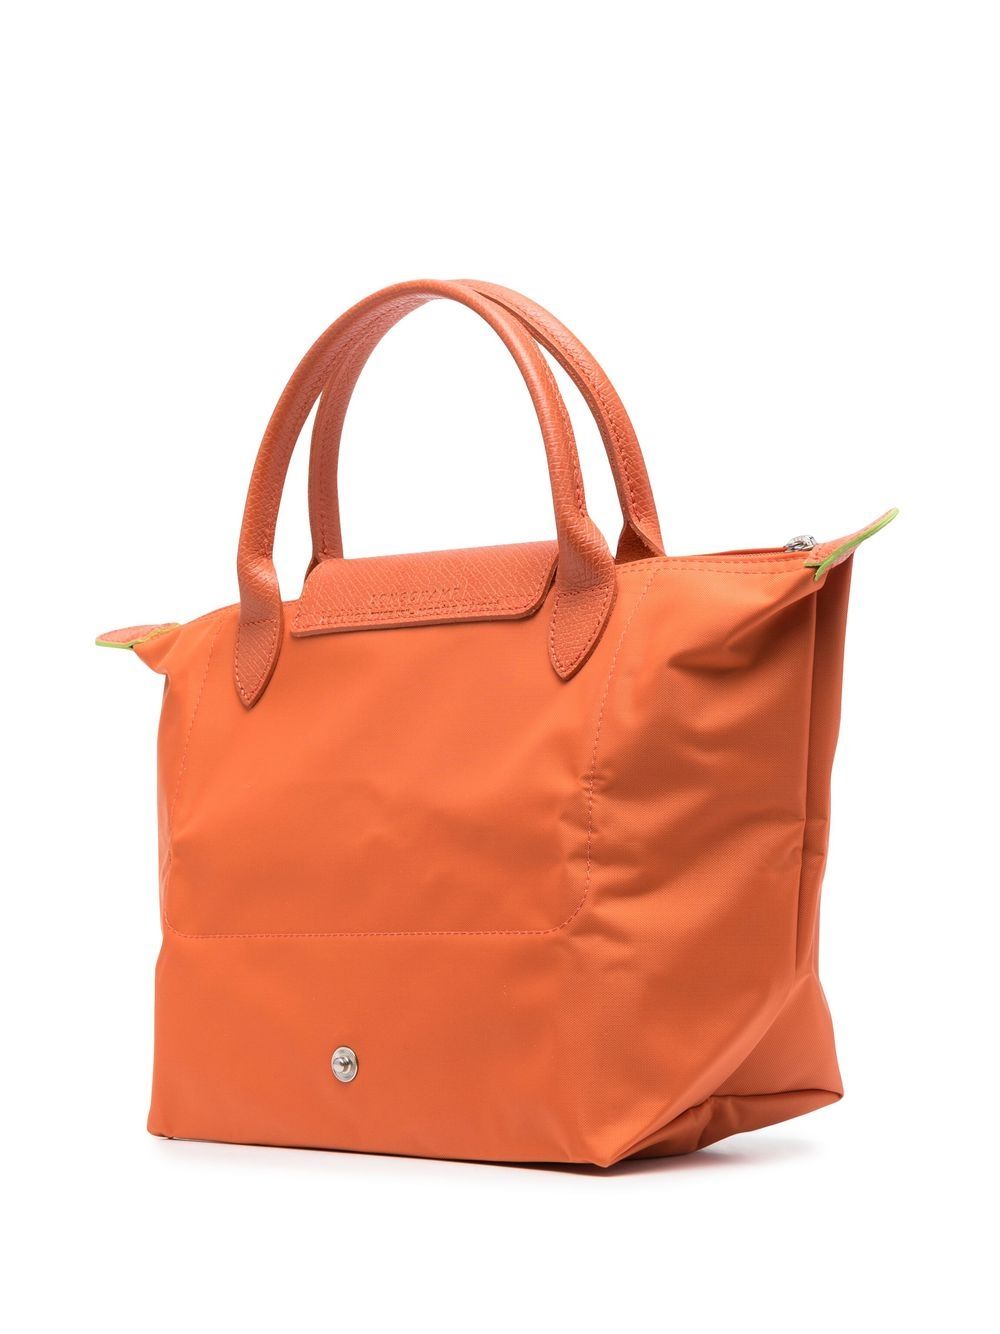 100% AUTHENTIC Longchamp Le Pliage Tote Bag (70th Anniversary